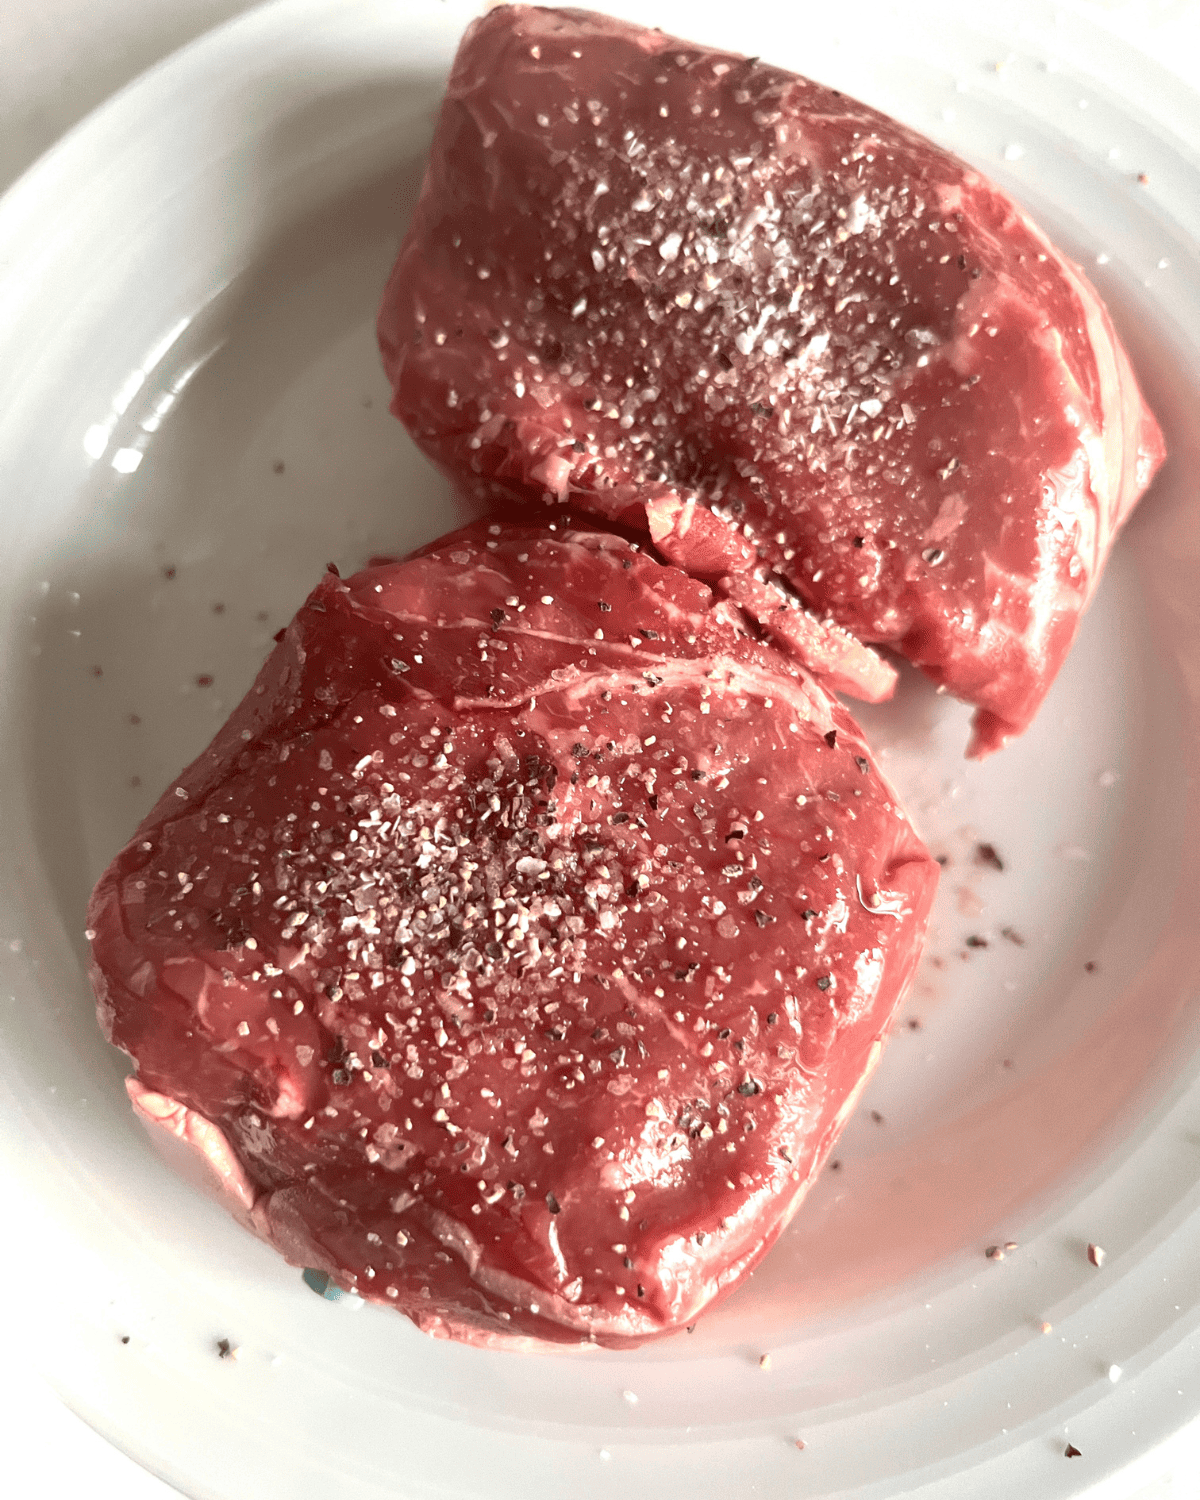 Seasoned petite top sirloin steaks with salt and pepper. 